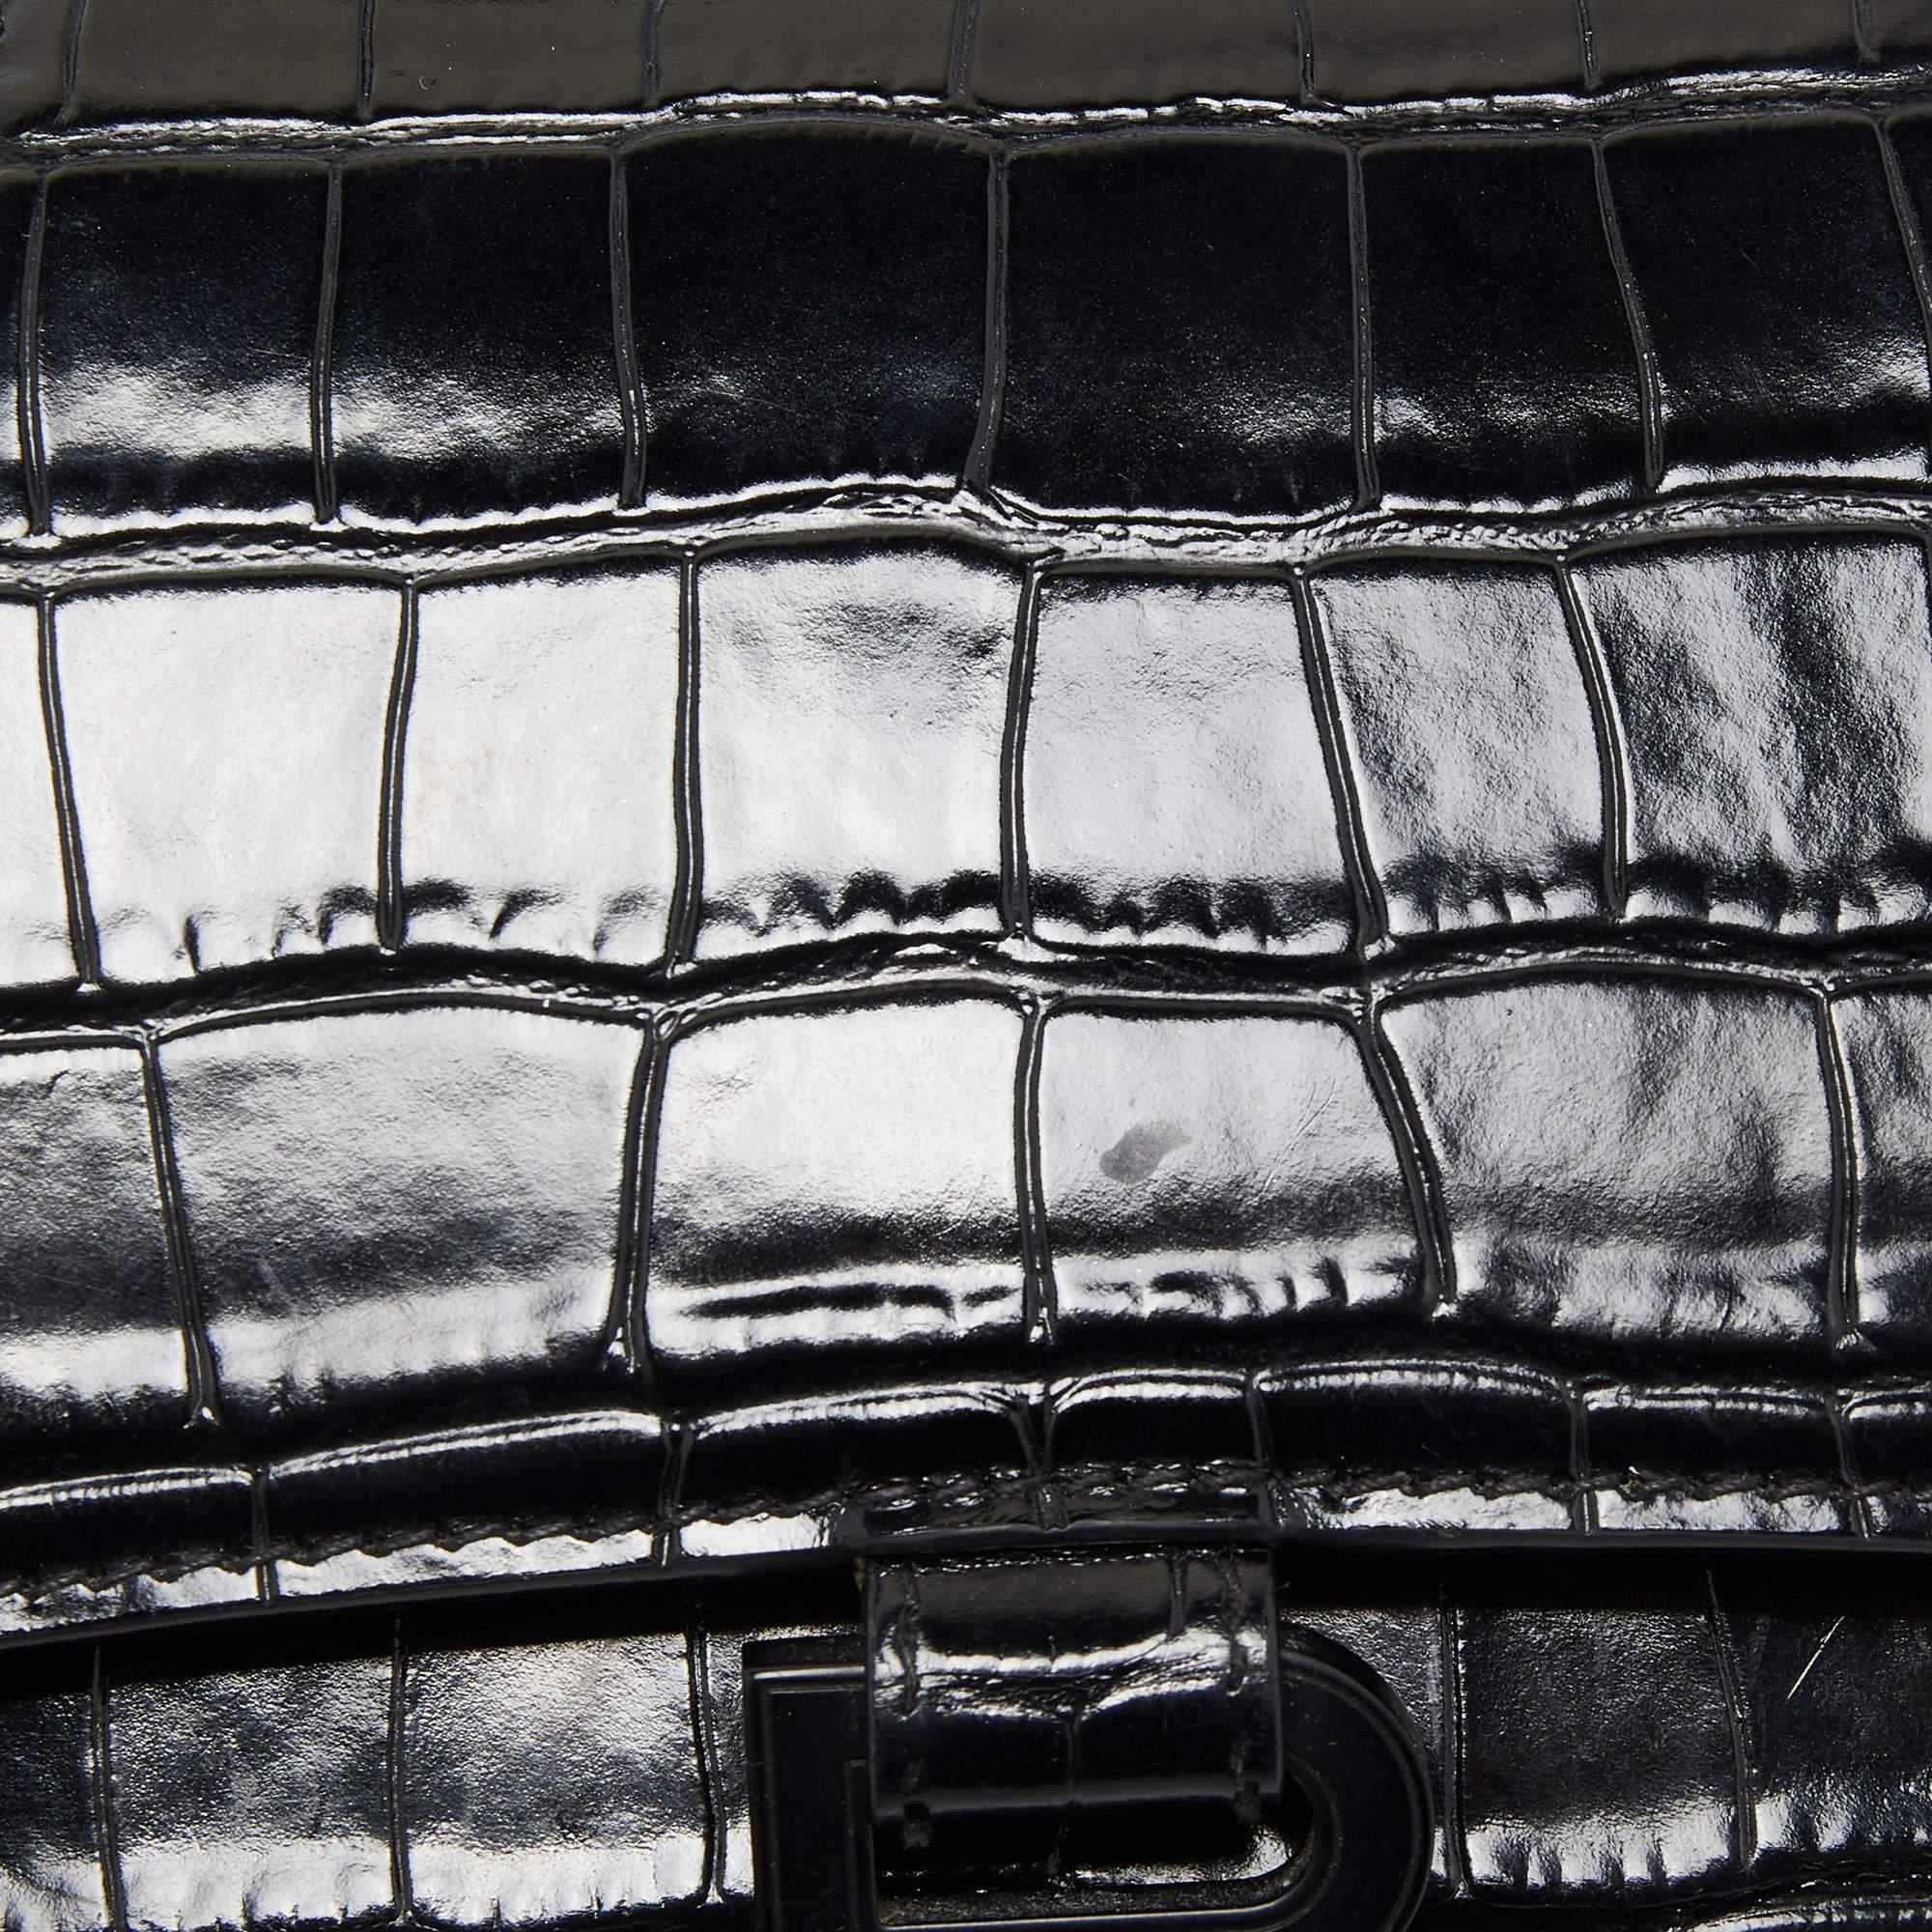 Balenciaga Black Croc Embossed Leather Small Hourglass Top Handle Bag 7